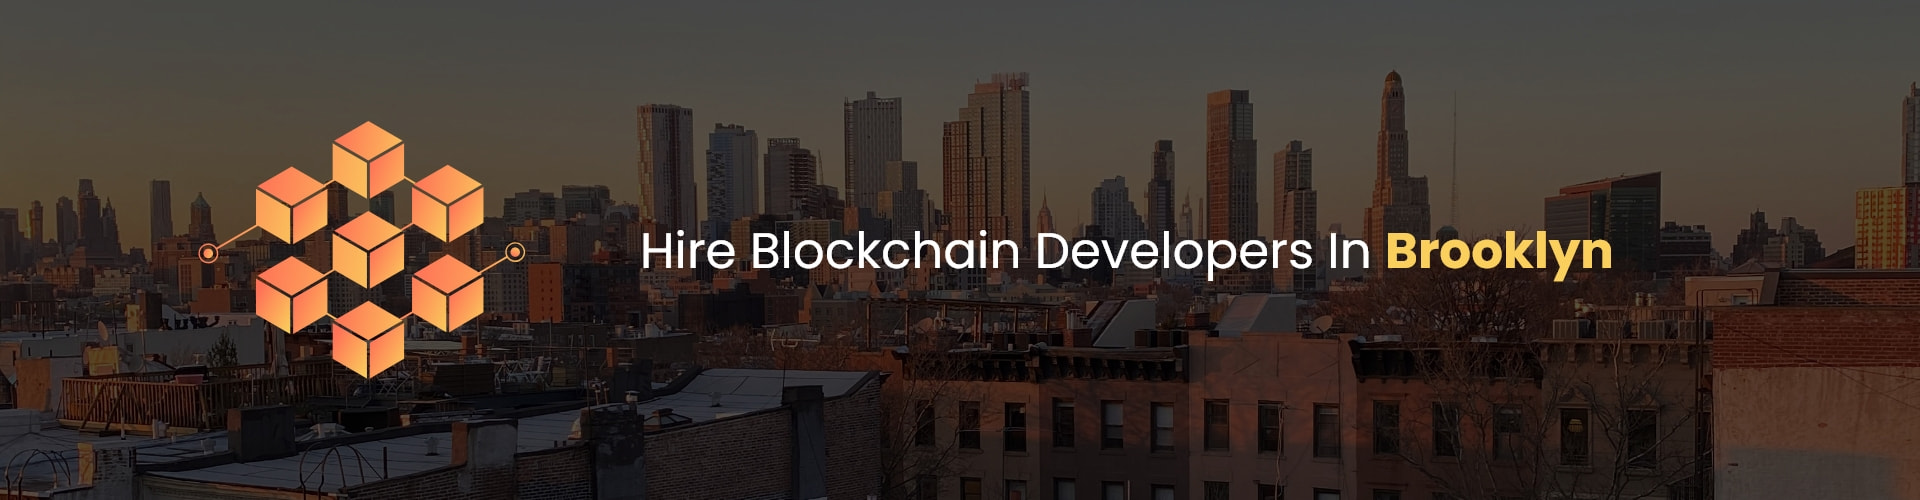 hire blockchain developers in brooklyn